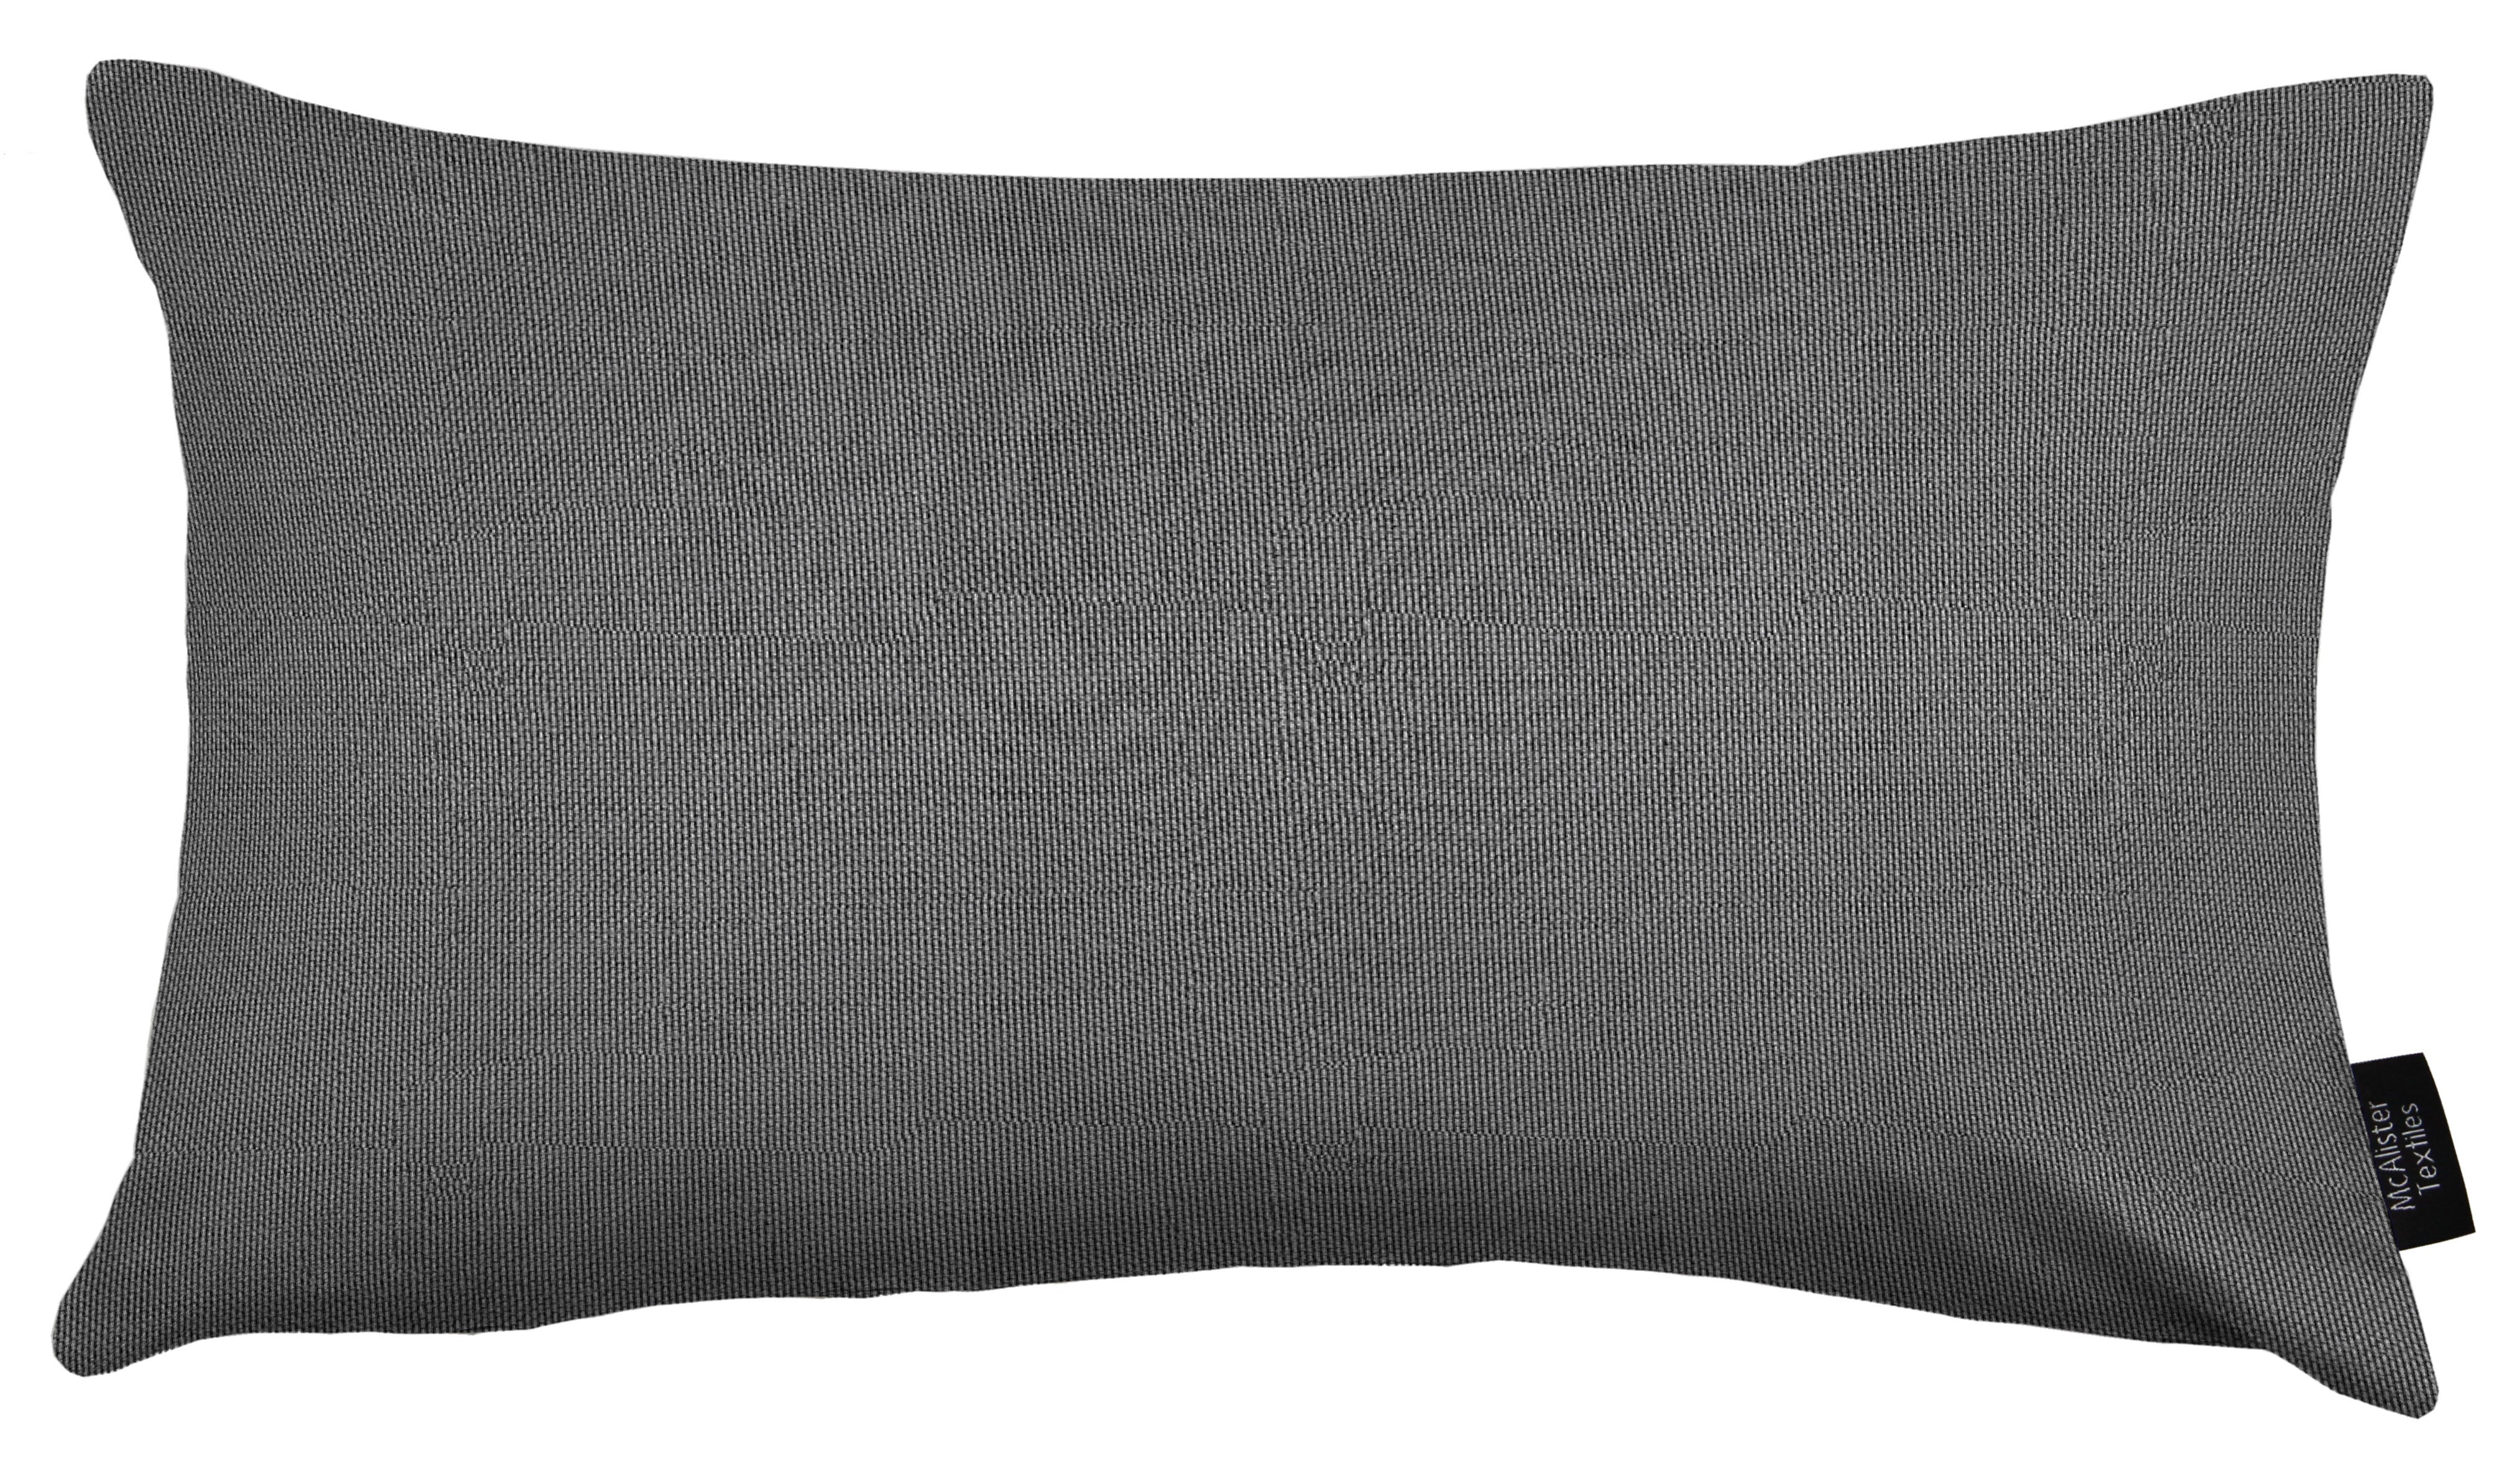 McAlister Textiles Sorrento Grey Outdoor Pillows Pillow Cover Only 50cm x 30cm 